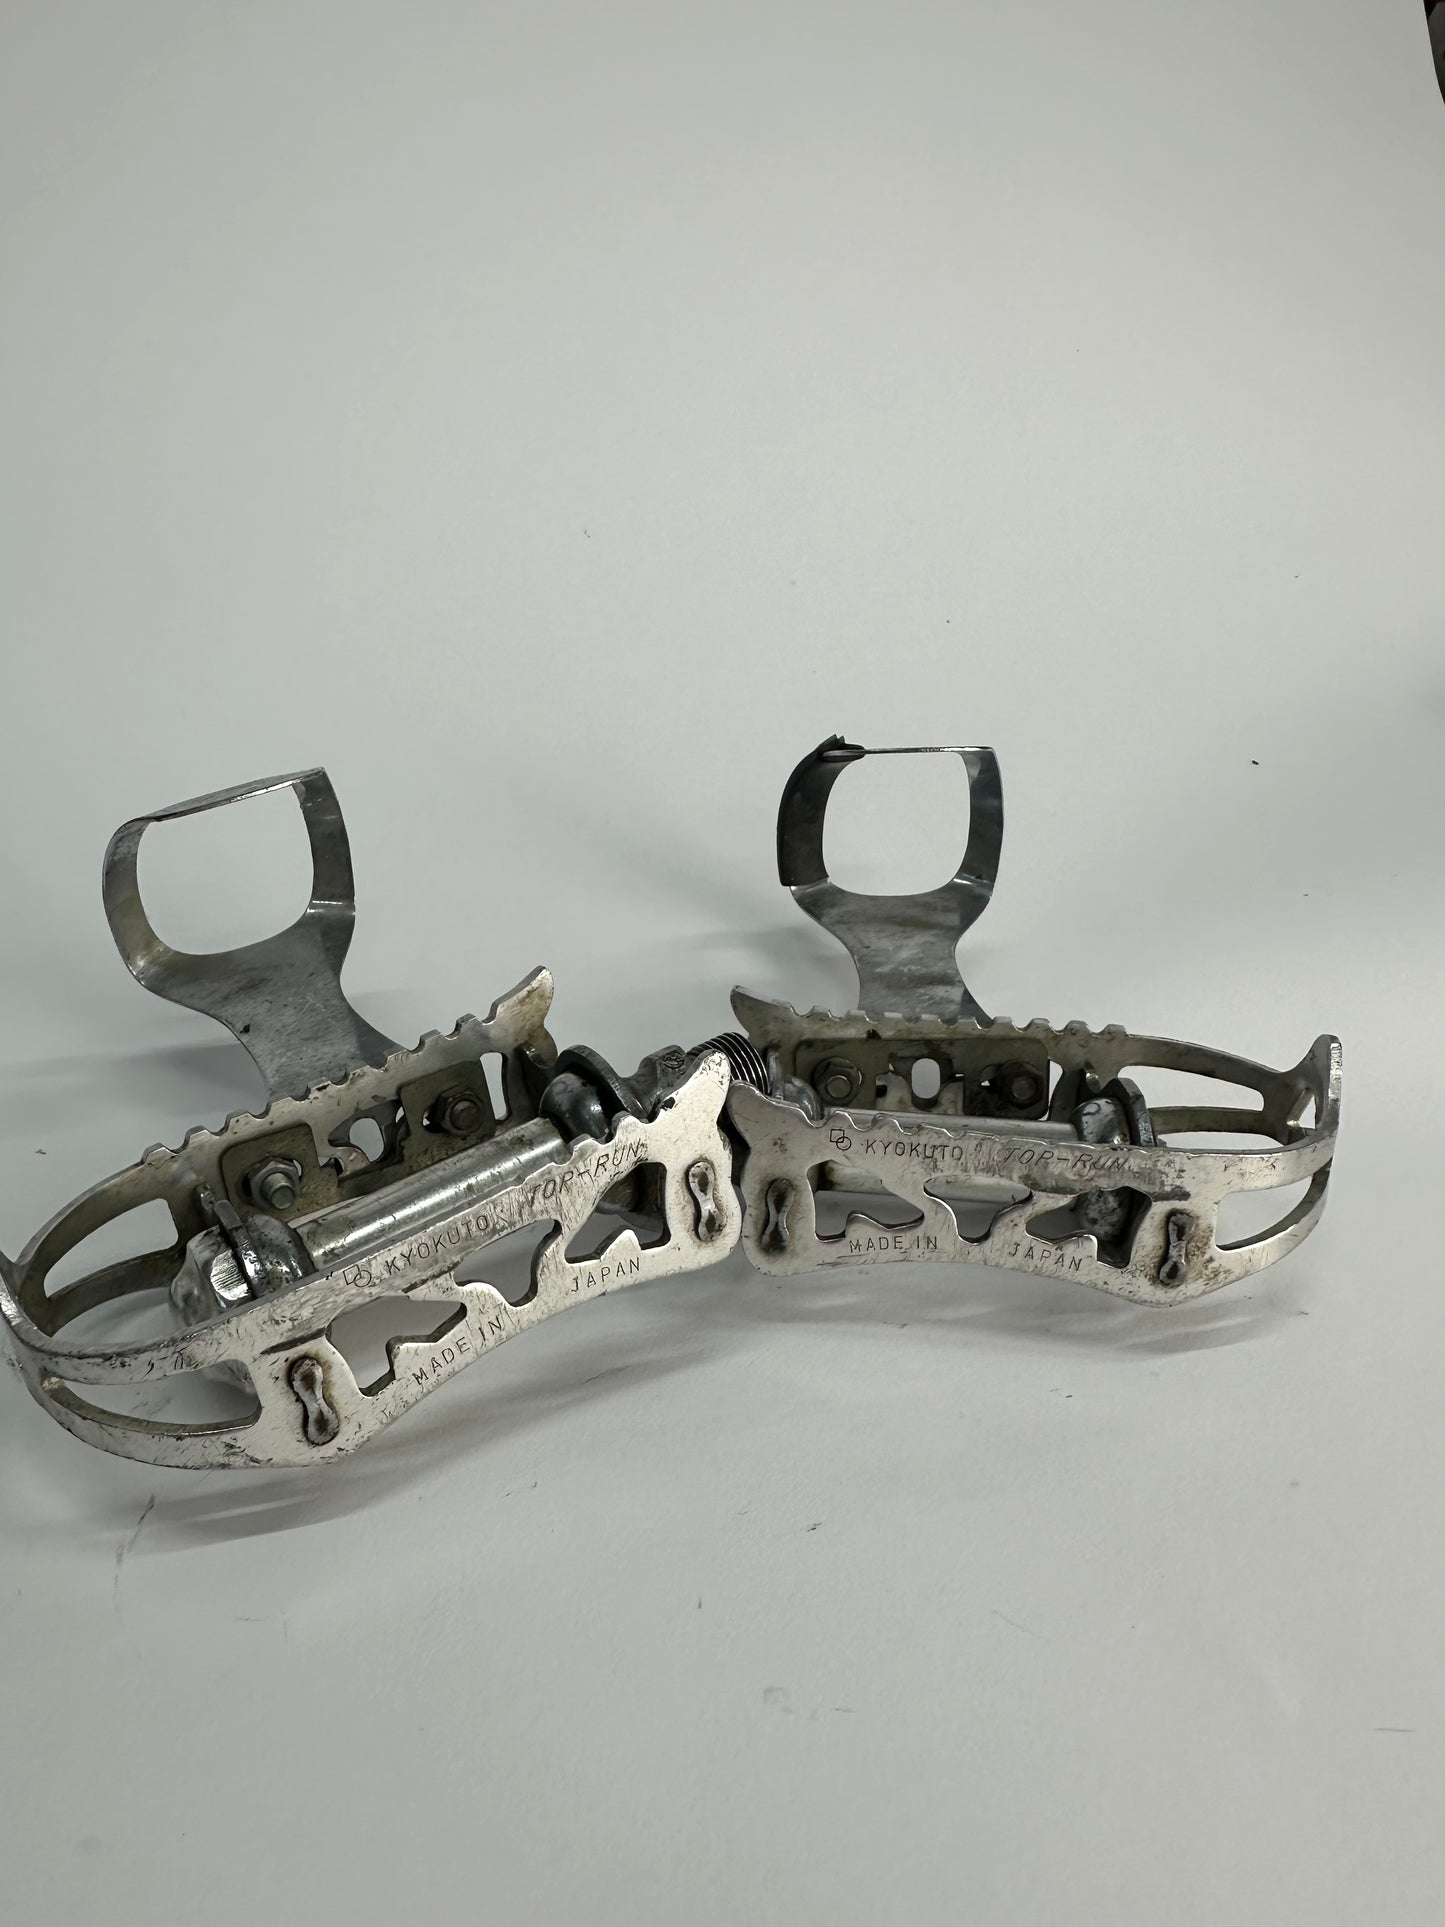 Kyokuto Top-Run pedals with half toe clips